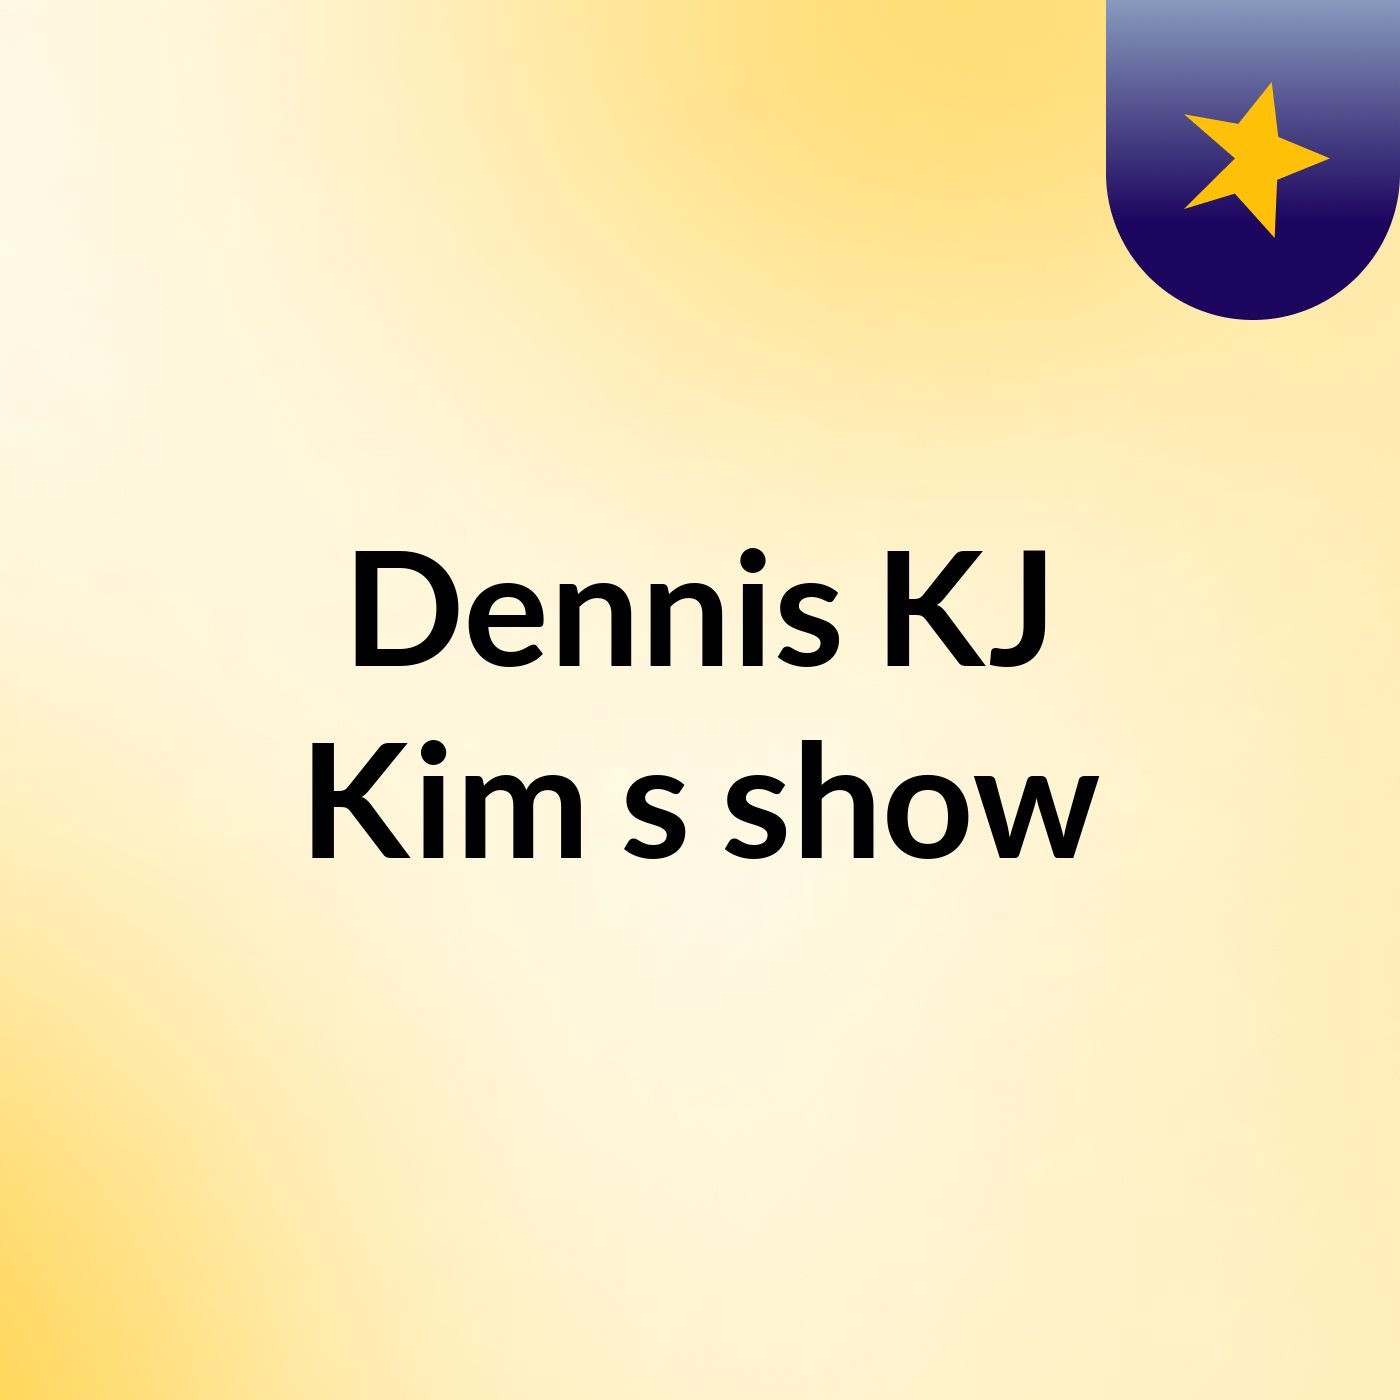 Dennis KJ Kim's show